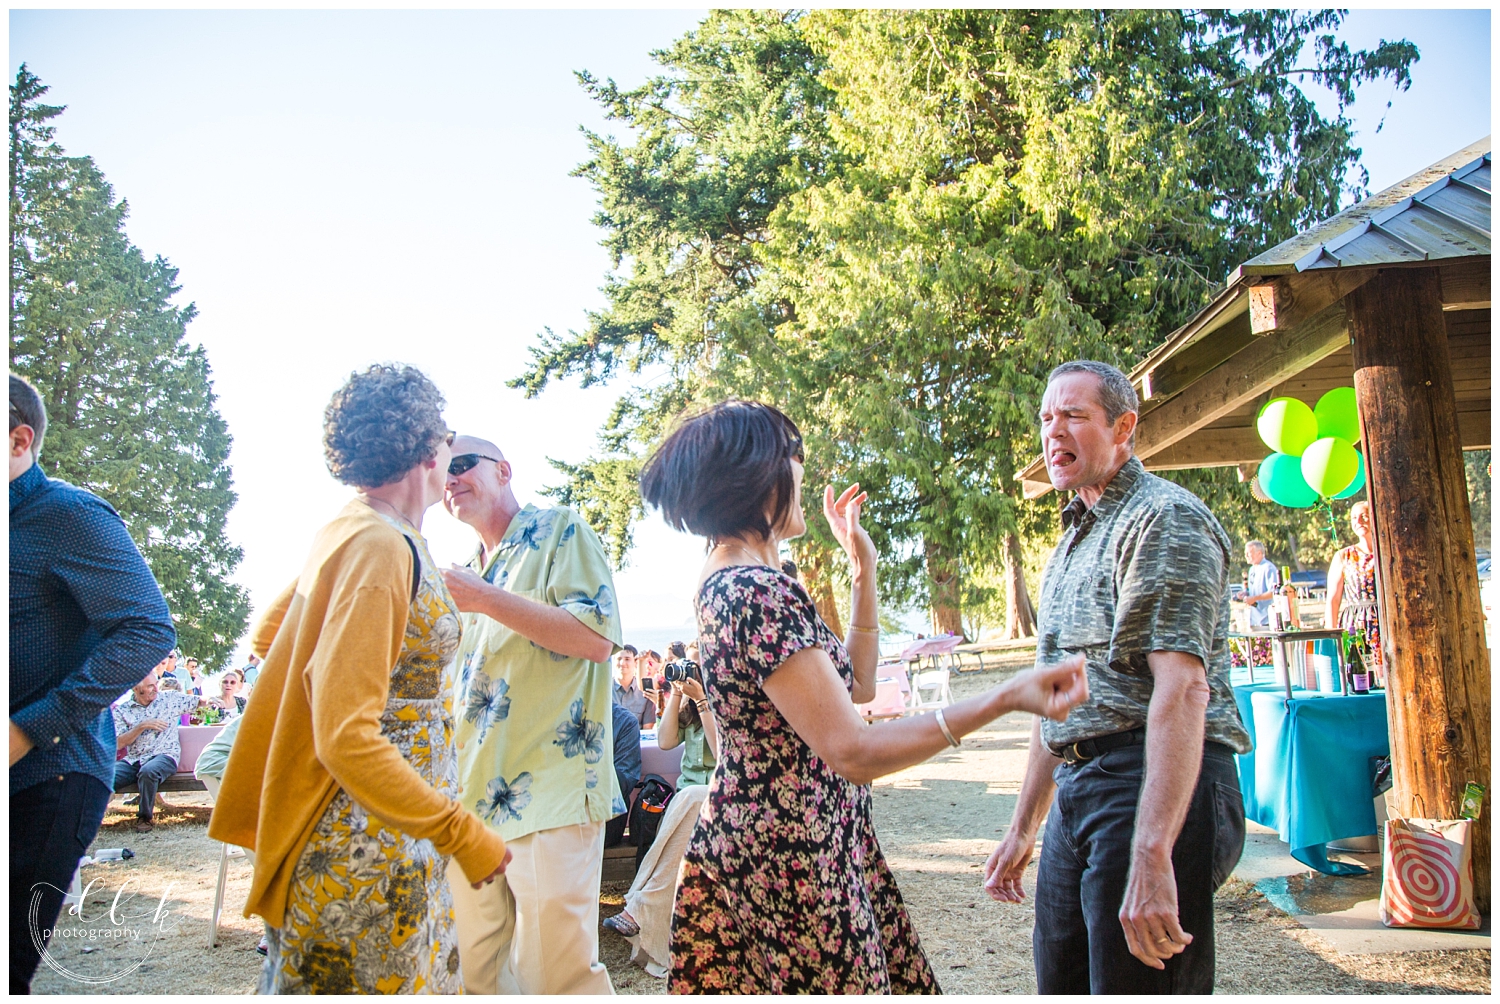 guests dancing at Anacortes wedding reception at Washington Park picnic area in Anacortes, Washington